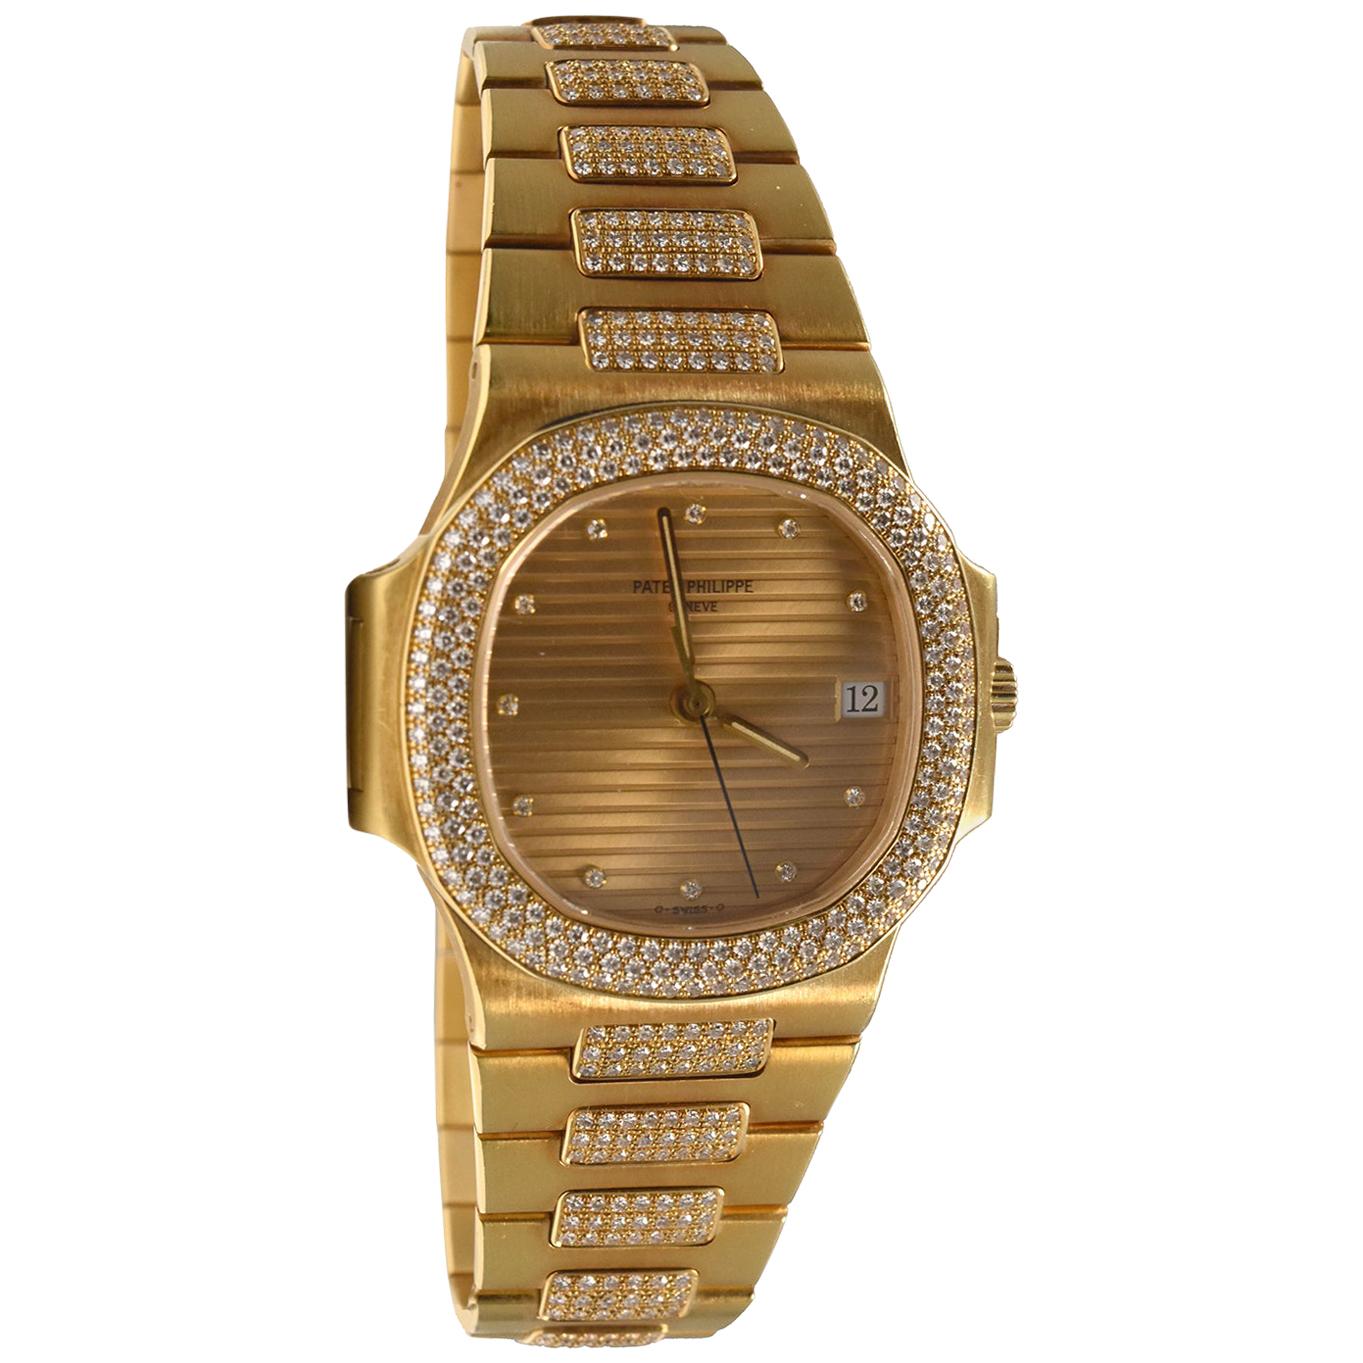 Patek Philippe Nautilus 3800/5 in 18 Karat Yellow Gold with Diamond Bezel Watch